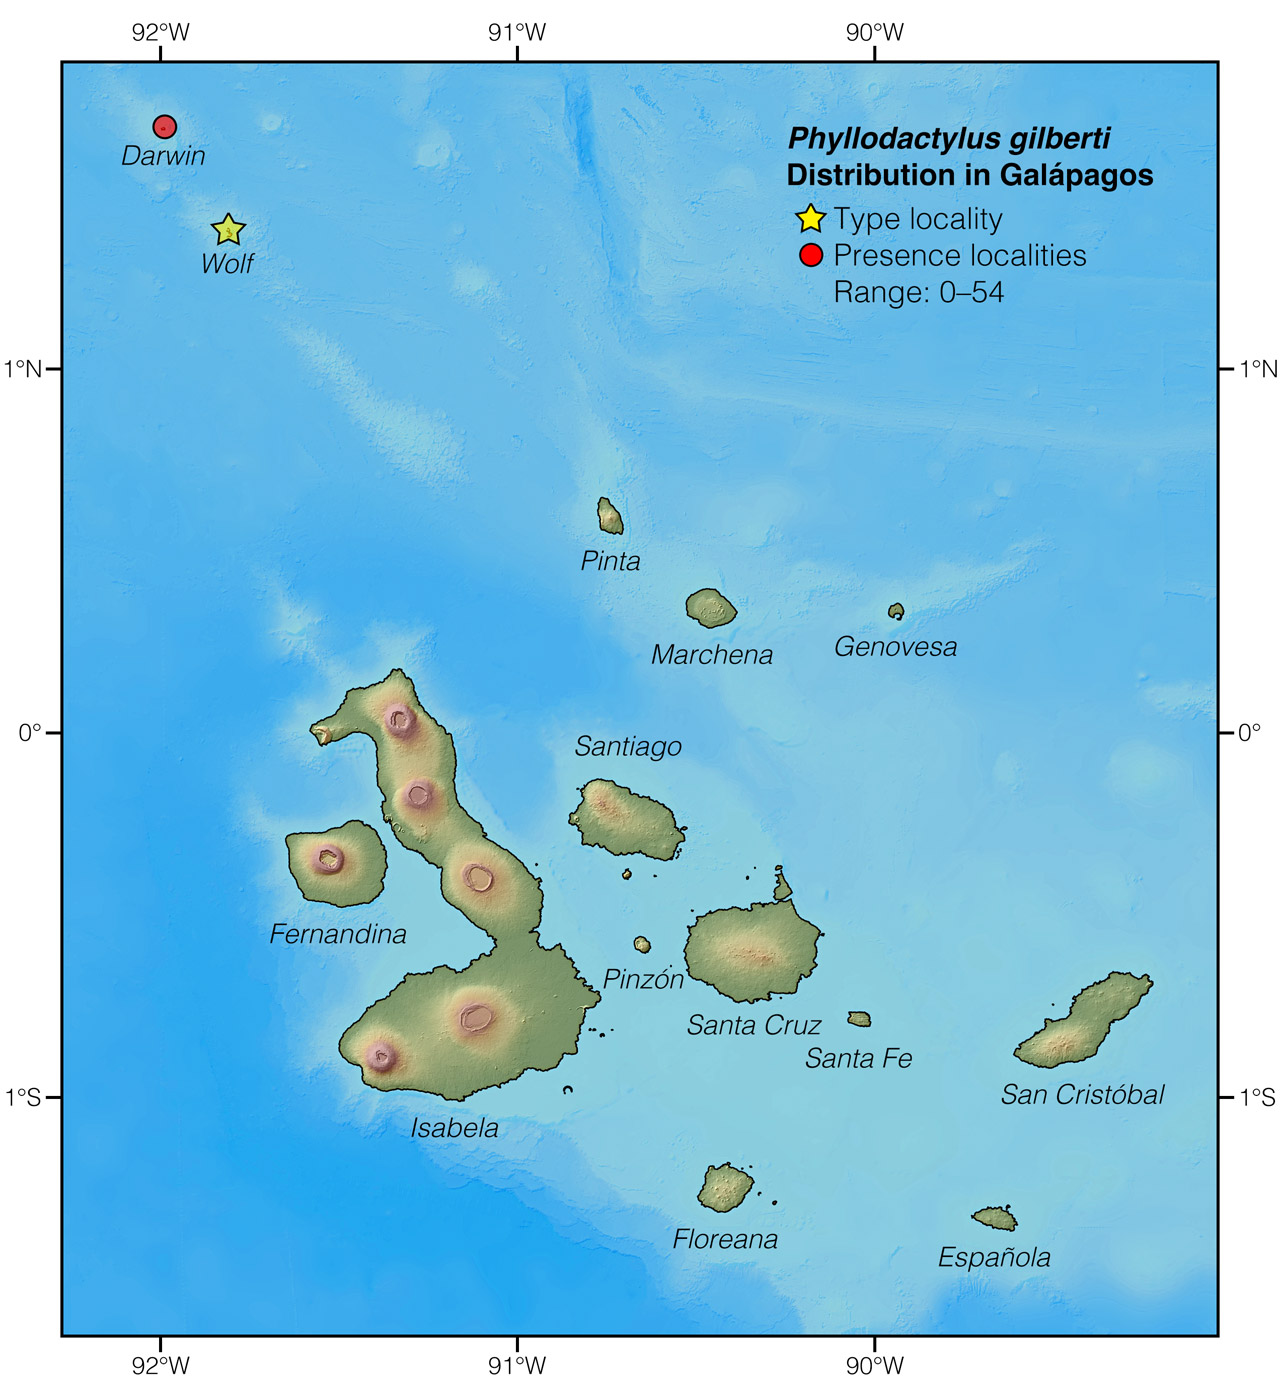 Distribution of Phyllodactylus gilberti in Galápagos